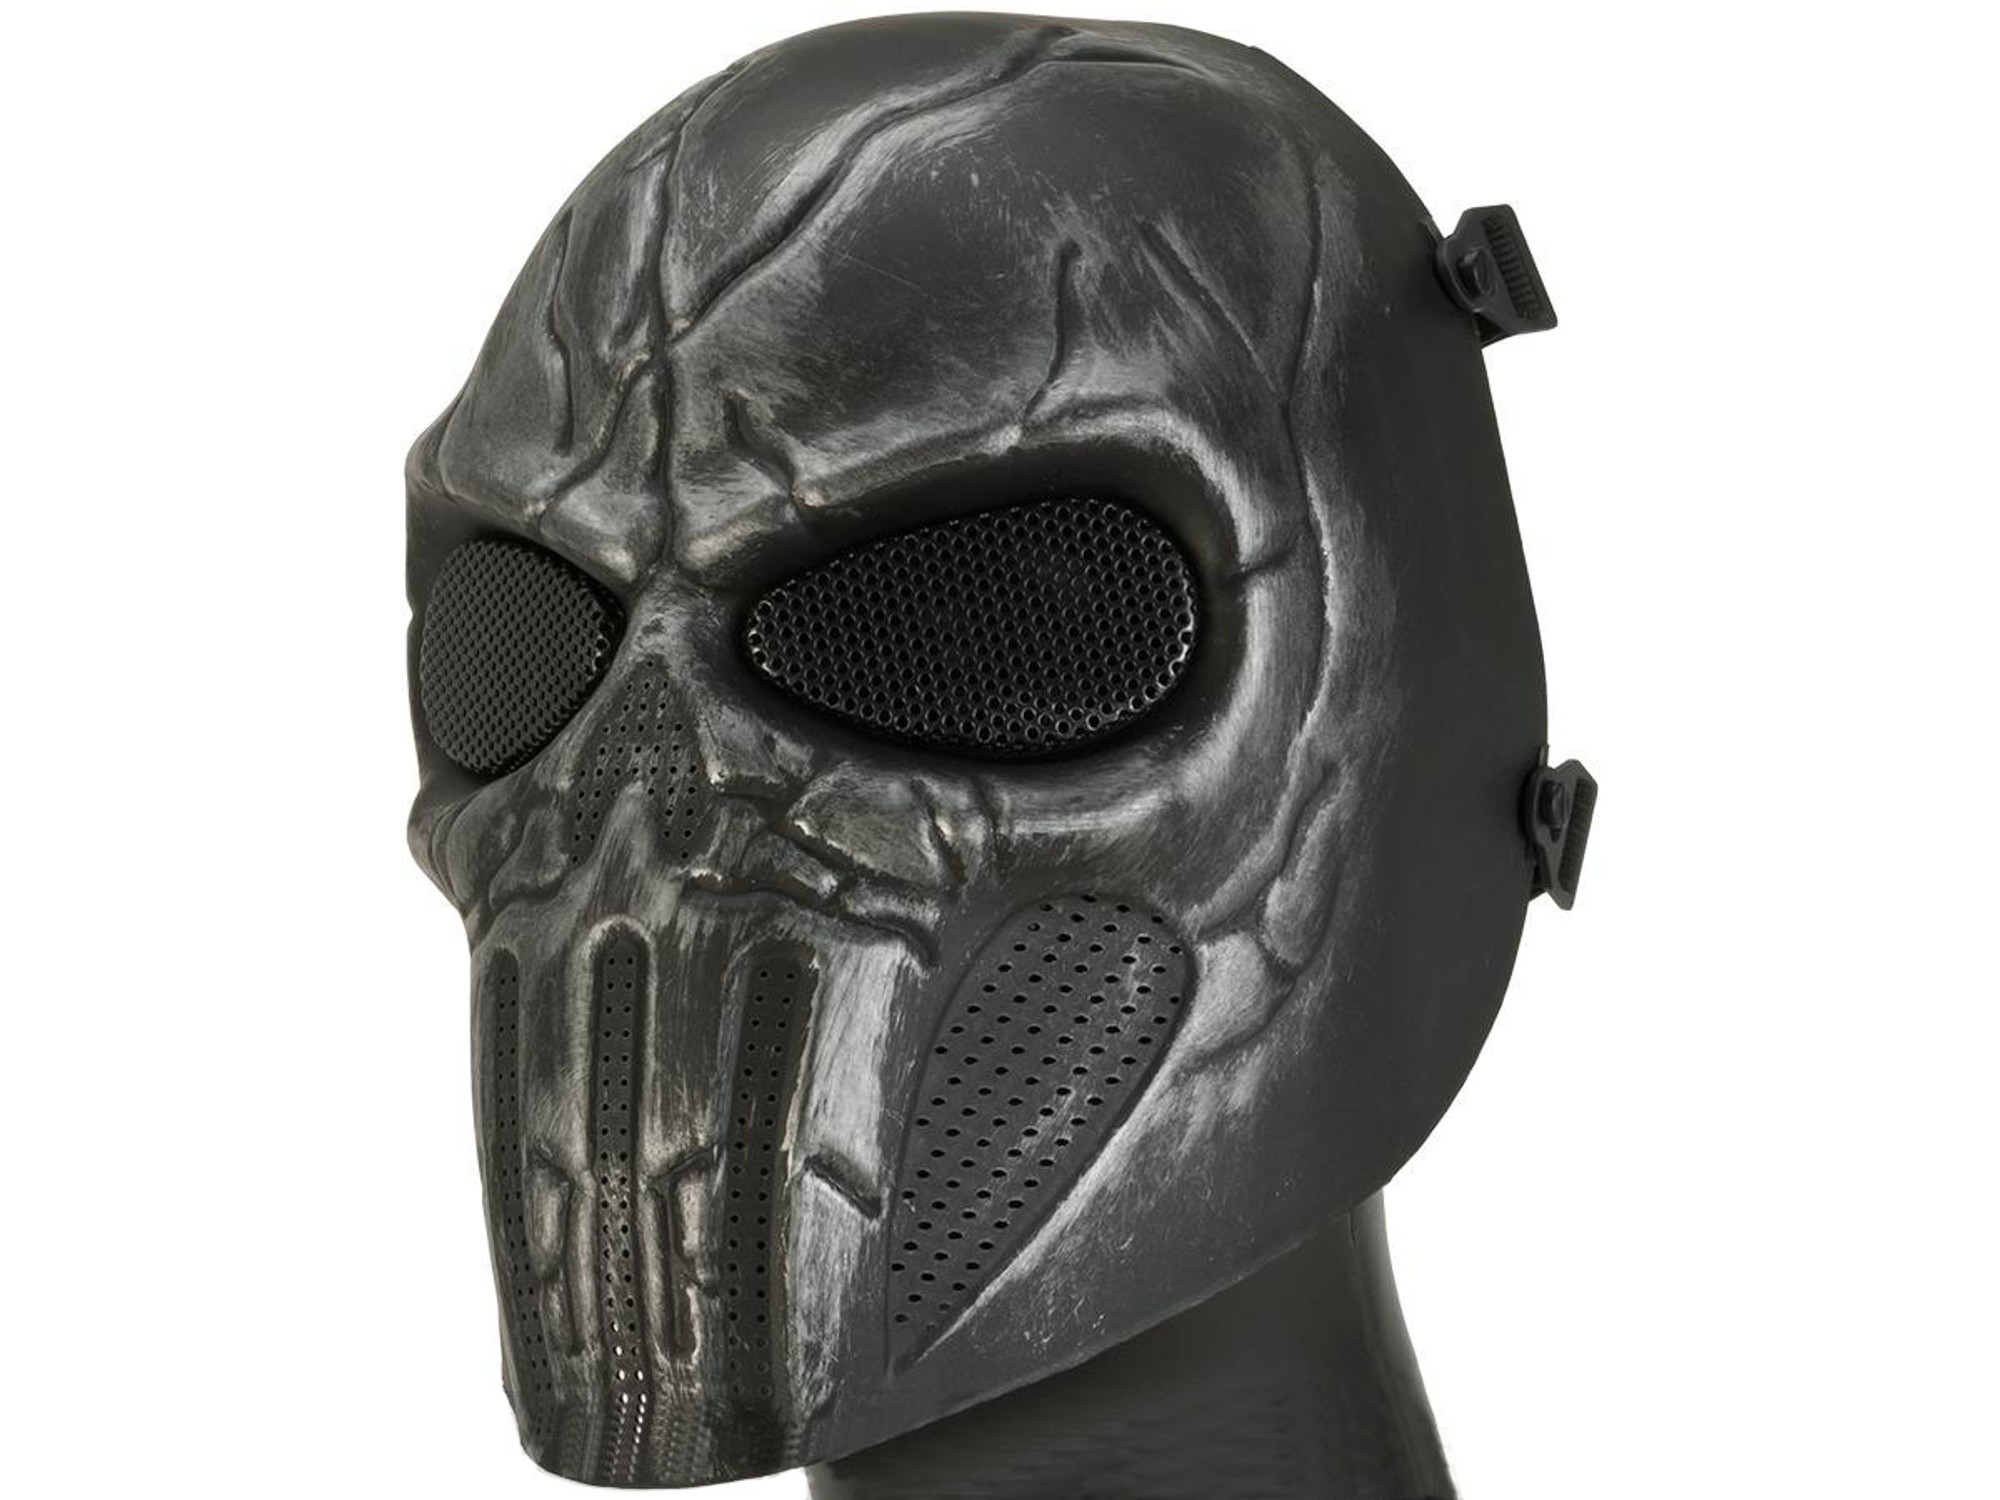 Matrix High Speed Wire Mesh "Chastener" Skull Mask - Chrome